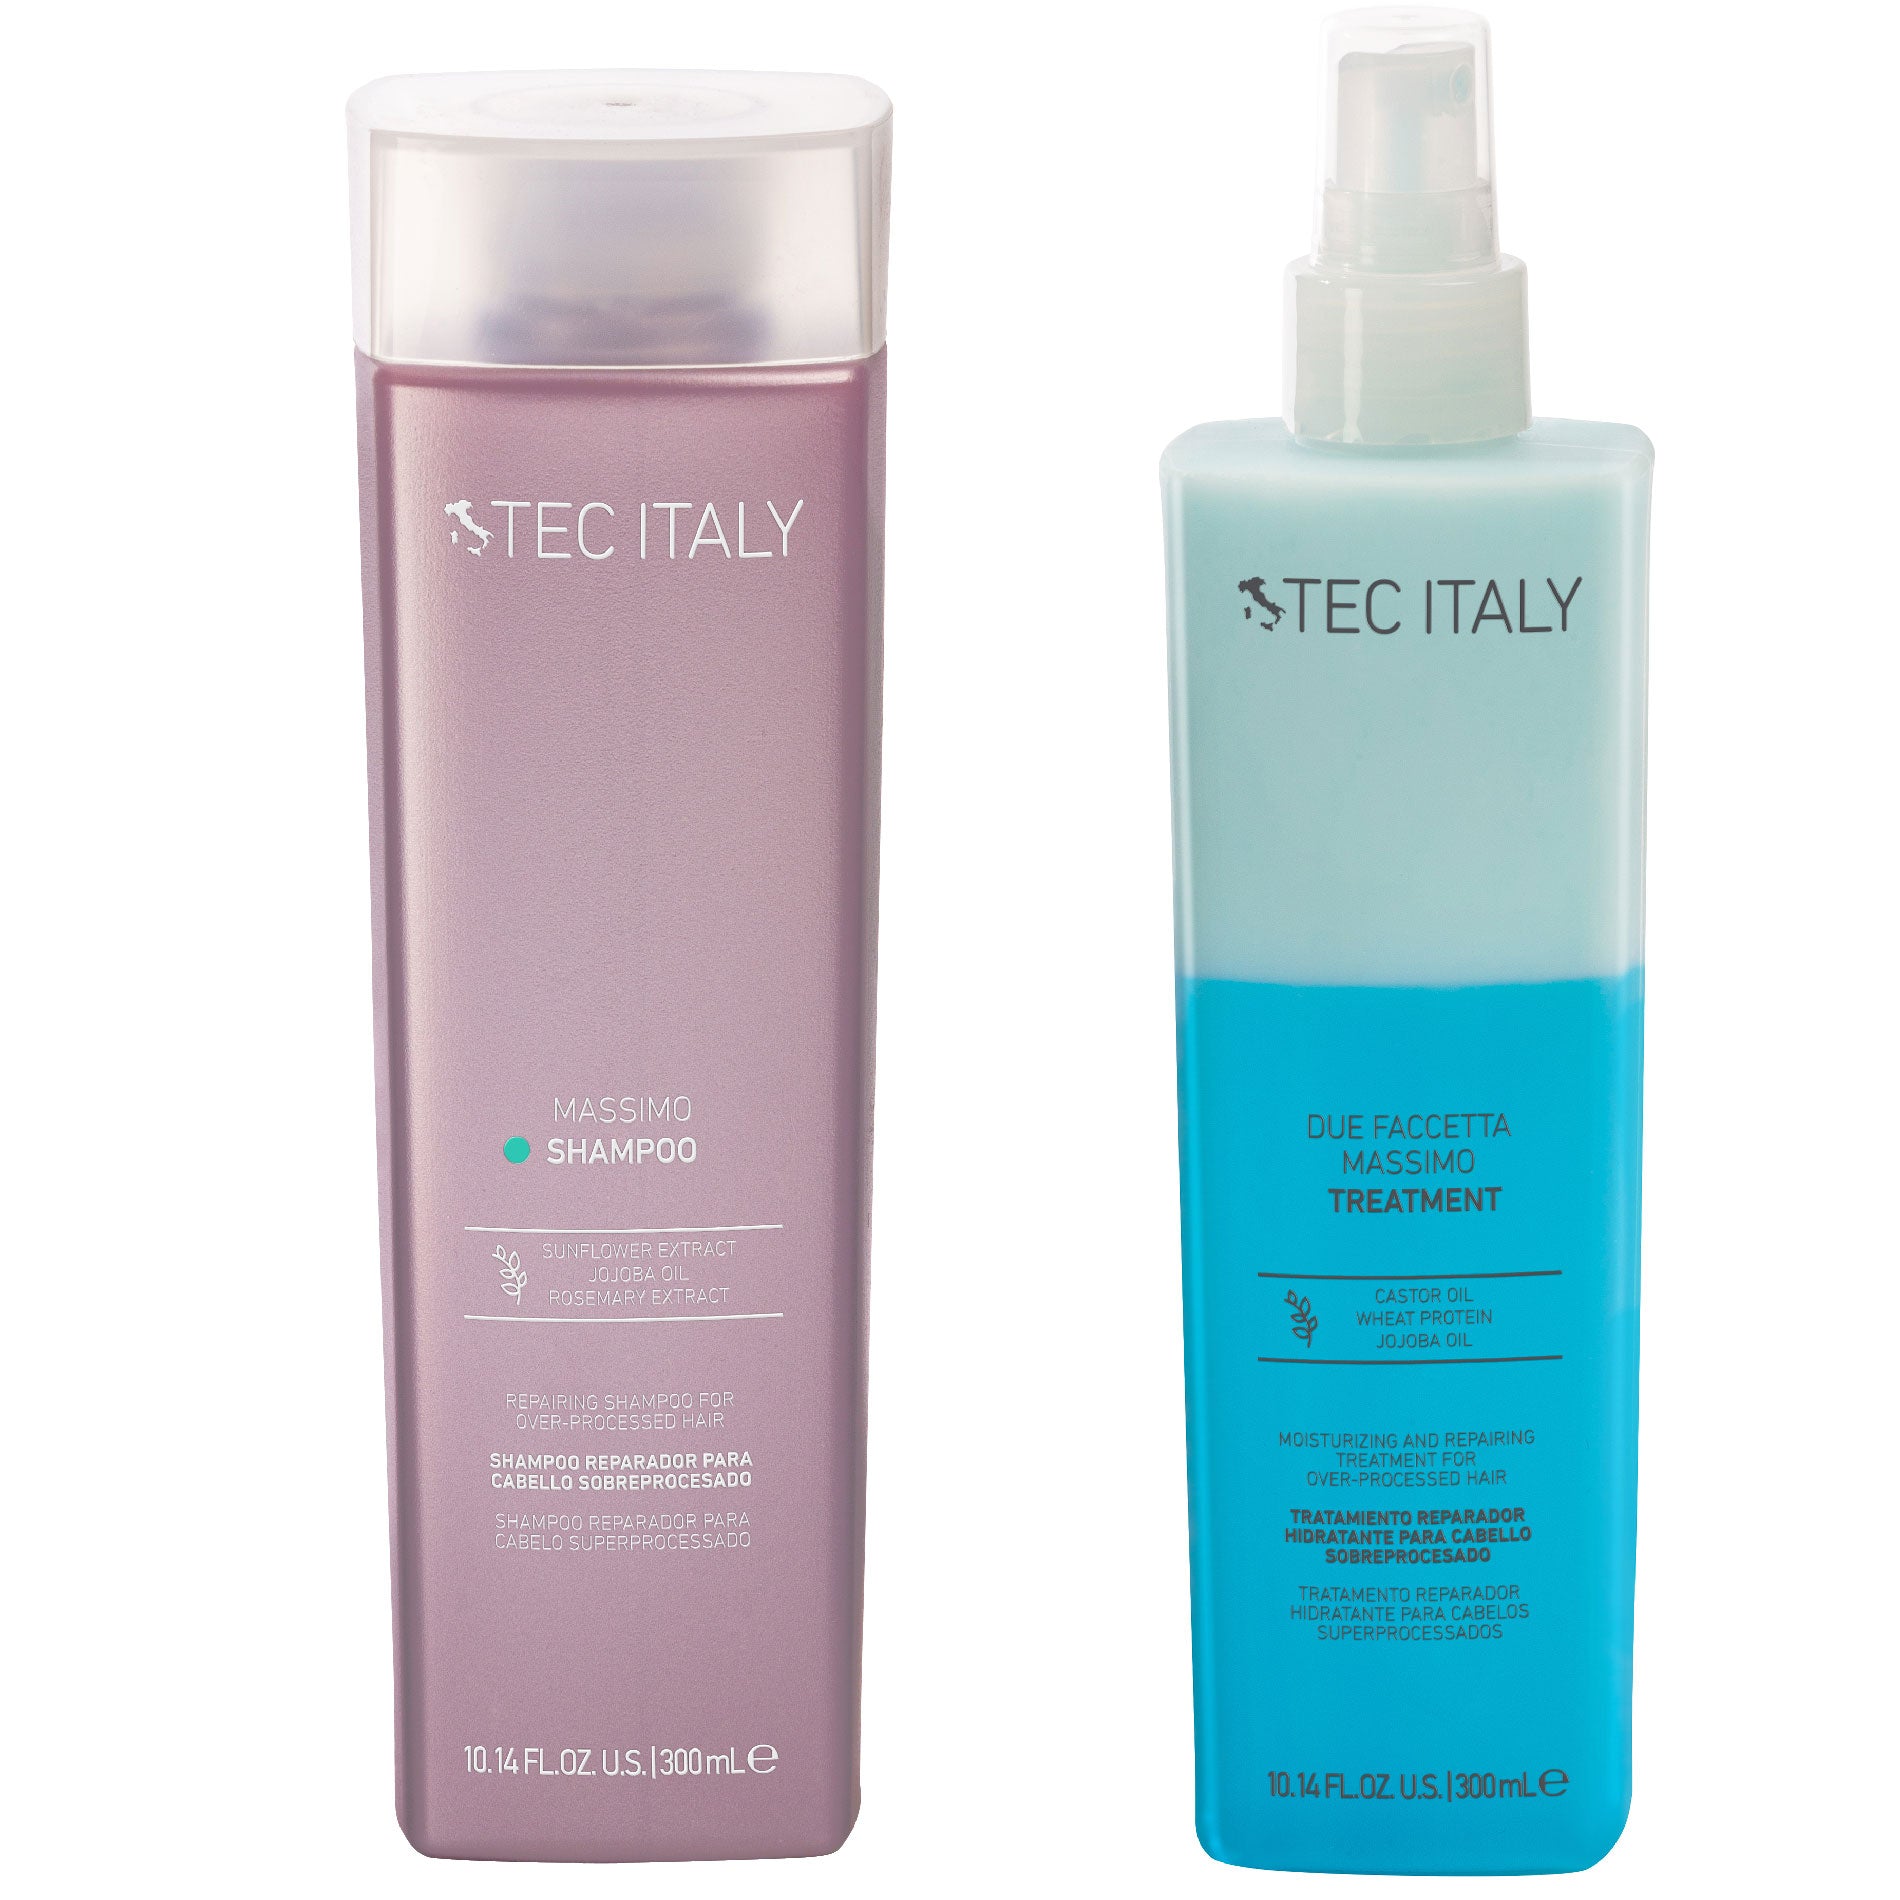 Kit Repair Cabello Maltratado Shampoo - Tratamiento Due Faccetta Tec Italy